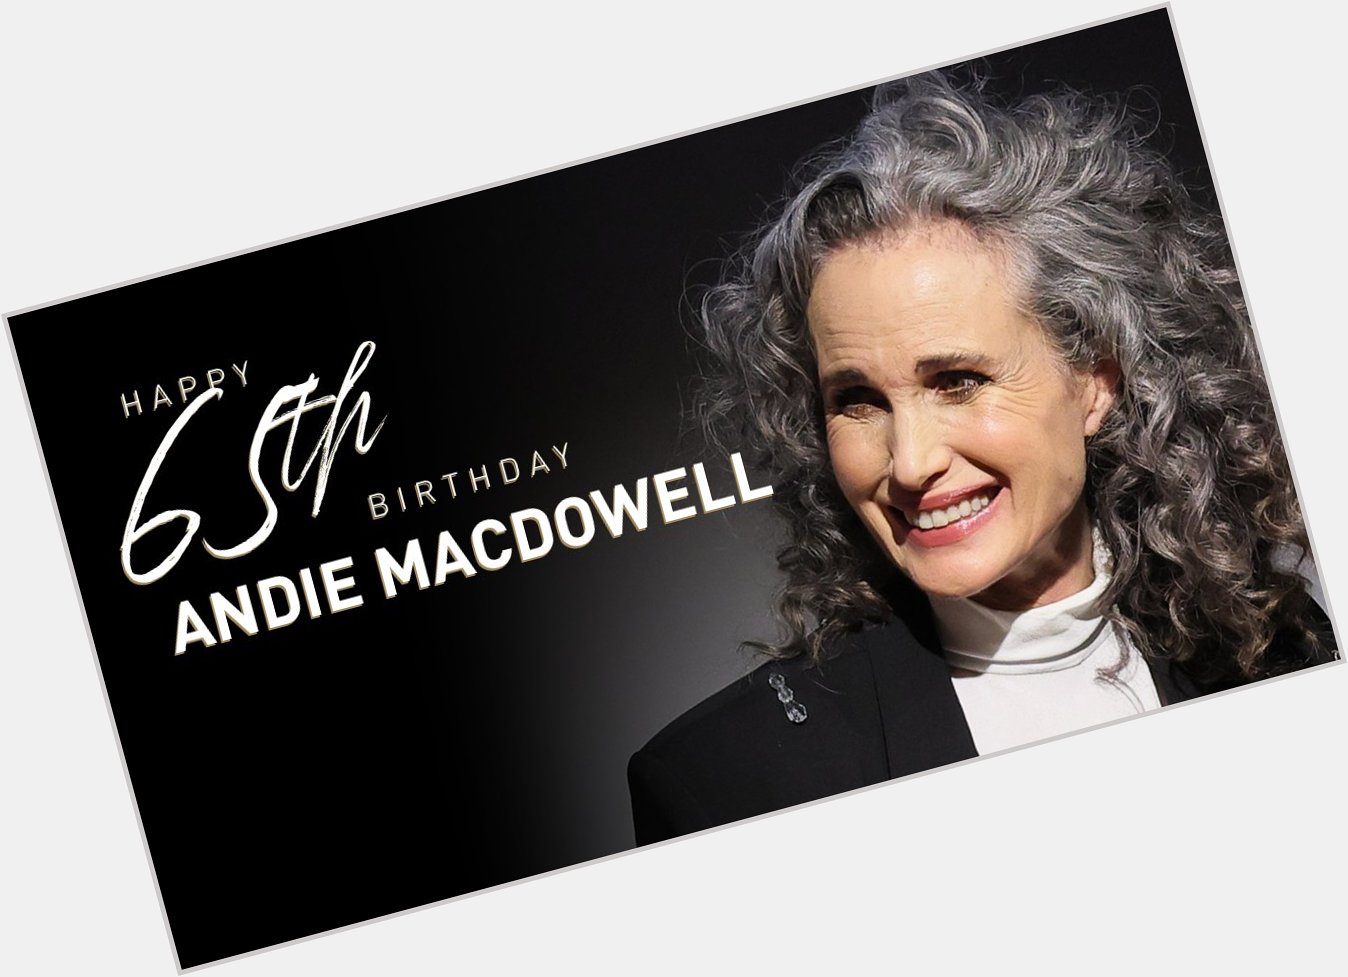 Happy 65th birthday Andie MacDowell!

Read her bio here:  